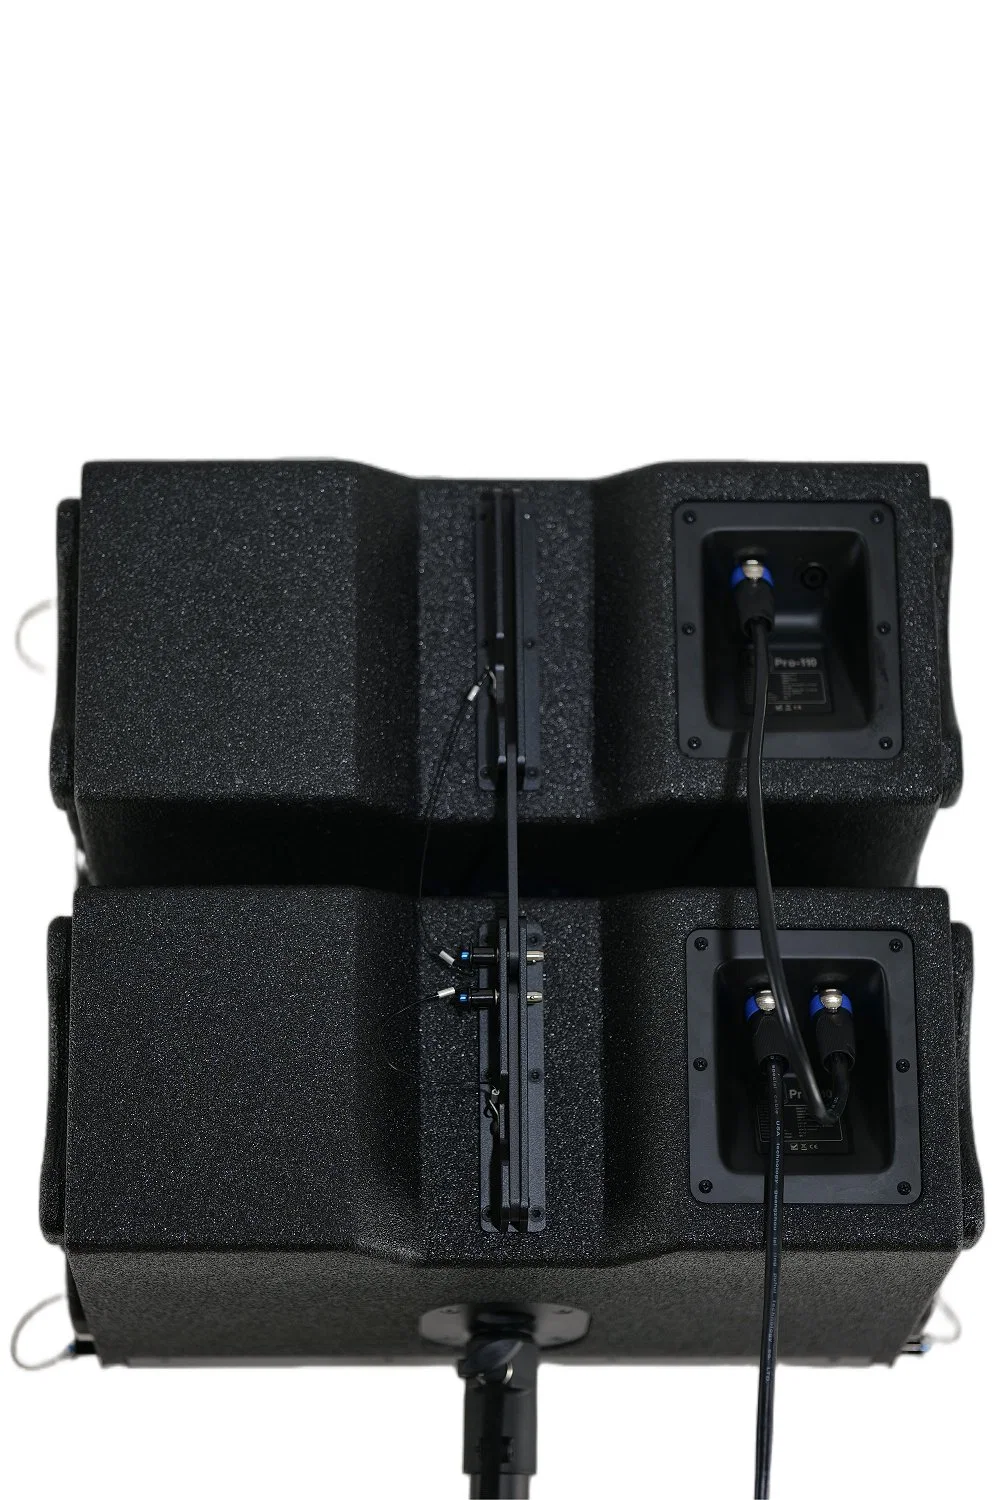 Sistema de sonido Mini Audio resistente al agua T. i PRO de 10 pulgadas Professional Line Array Speaker